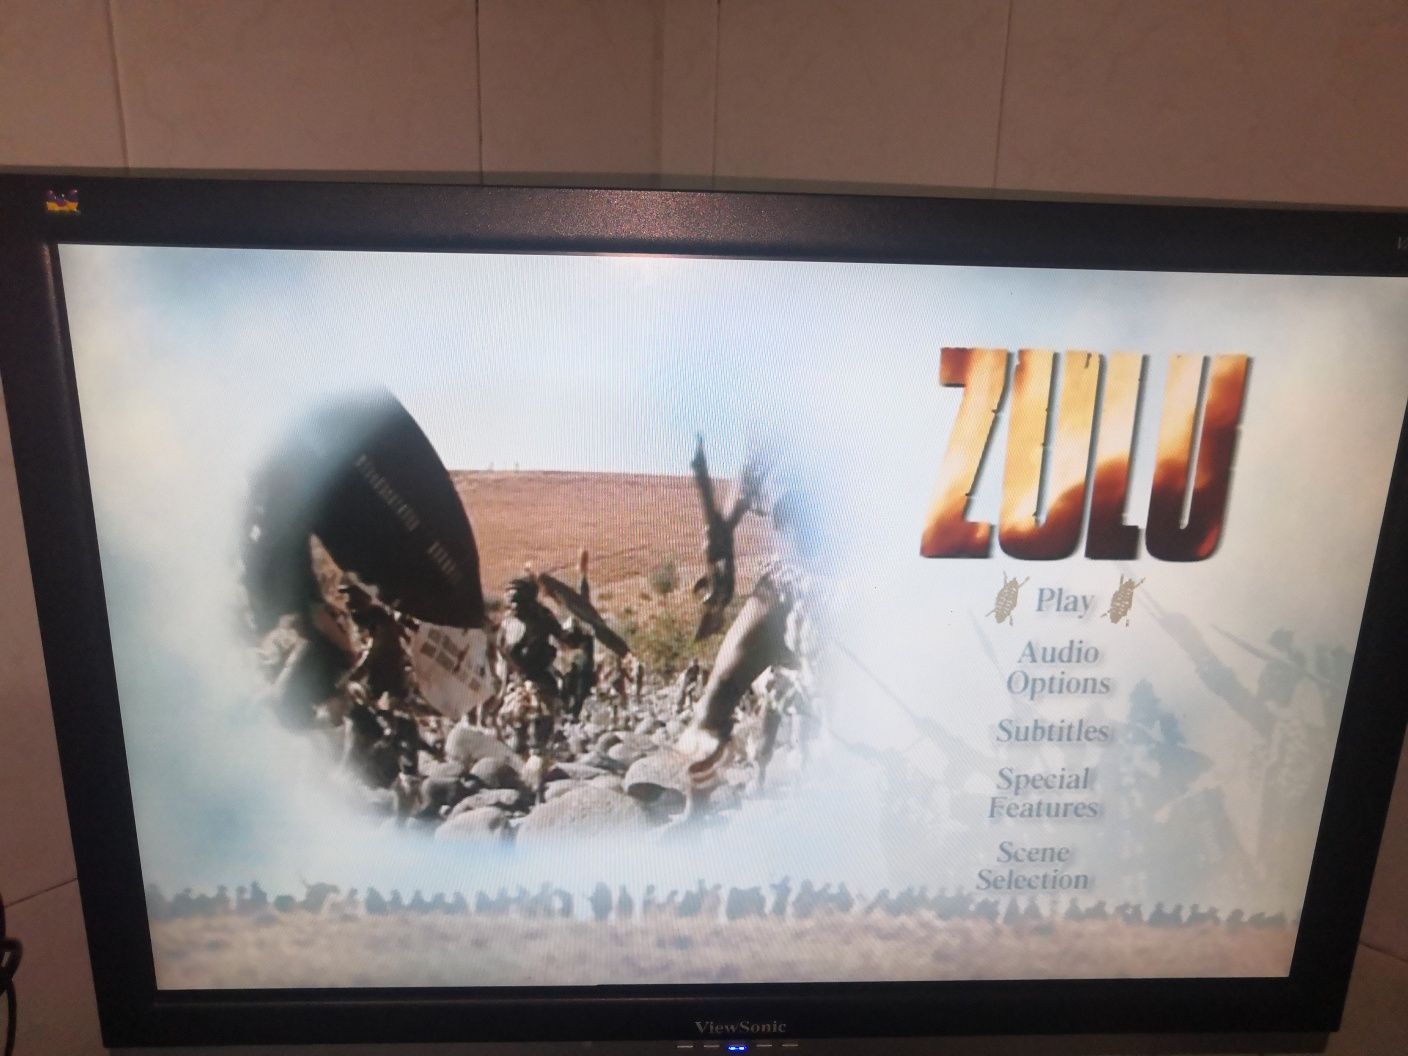 Zulu _ediçã especial